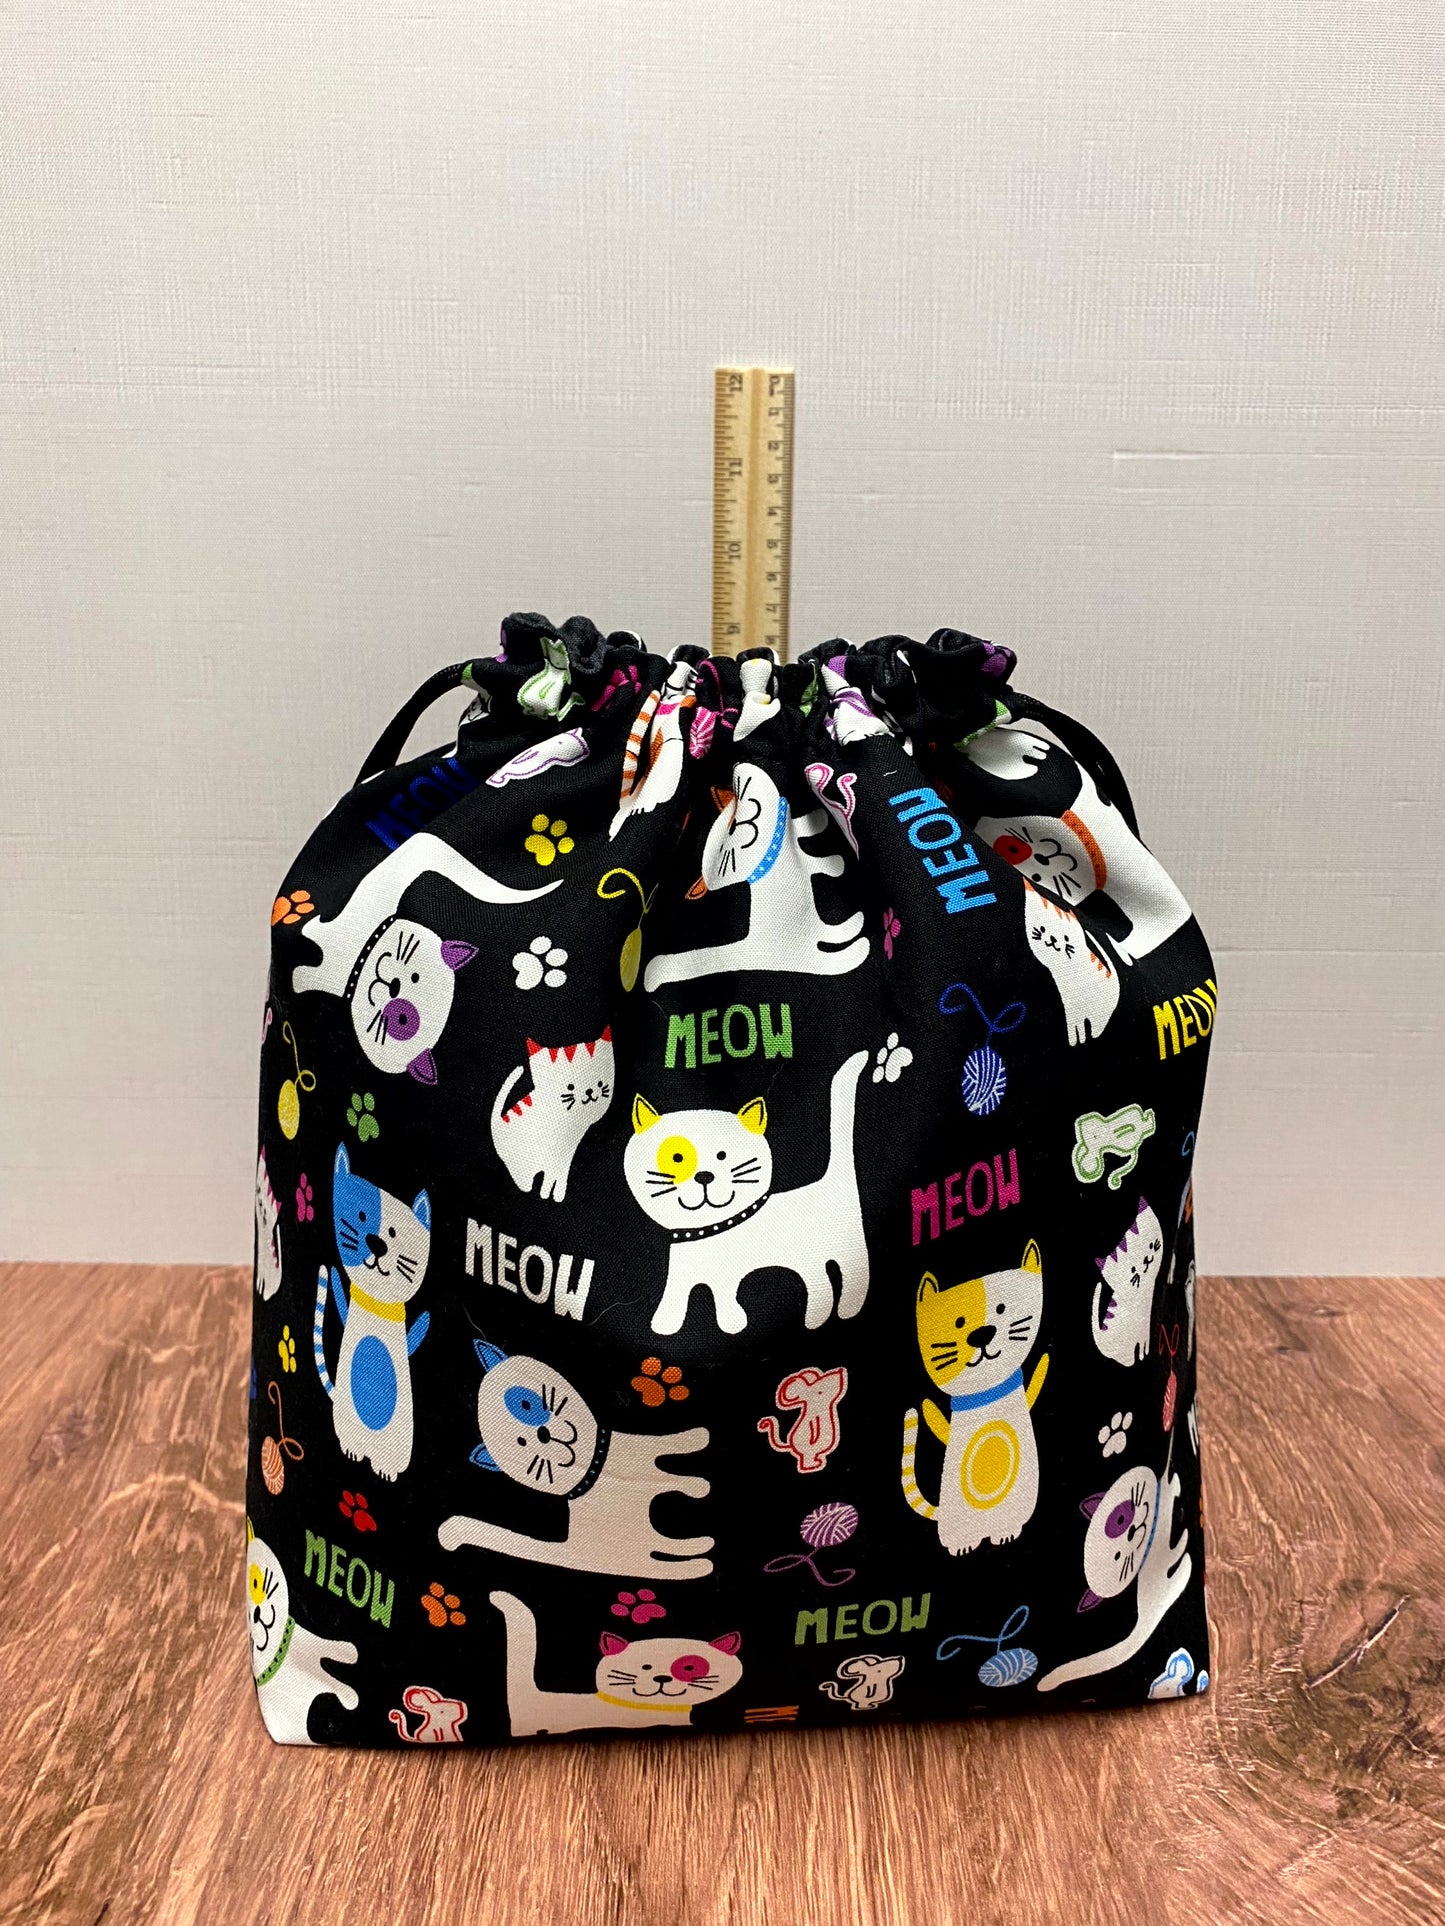 Cat Project Bag - Handmade - Drawstring Bag – Knitting Bag – Crochet Bag - Cross Stitch Bag - Toy Sack - Bingo Bag - Rainbow